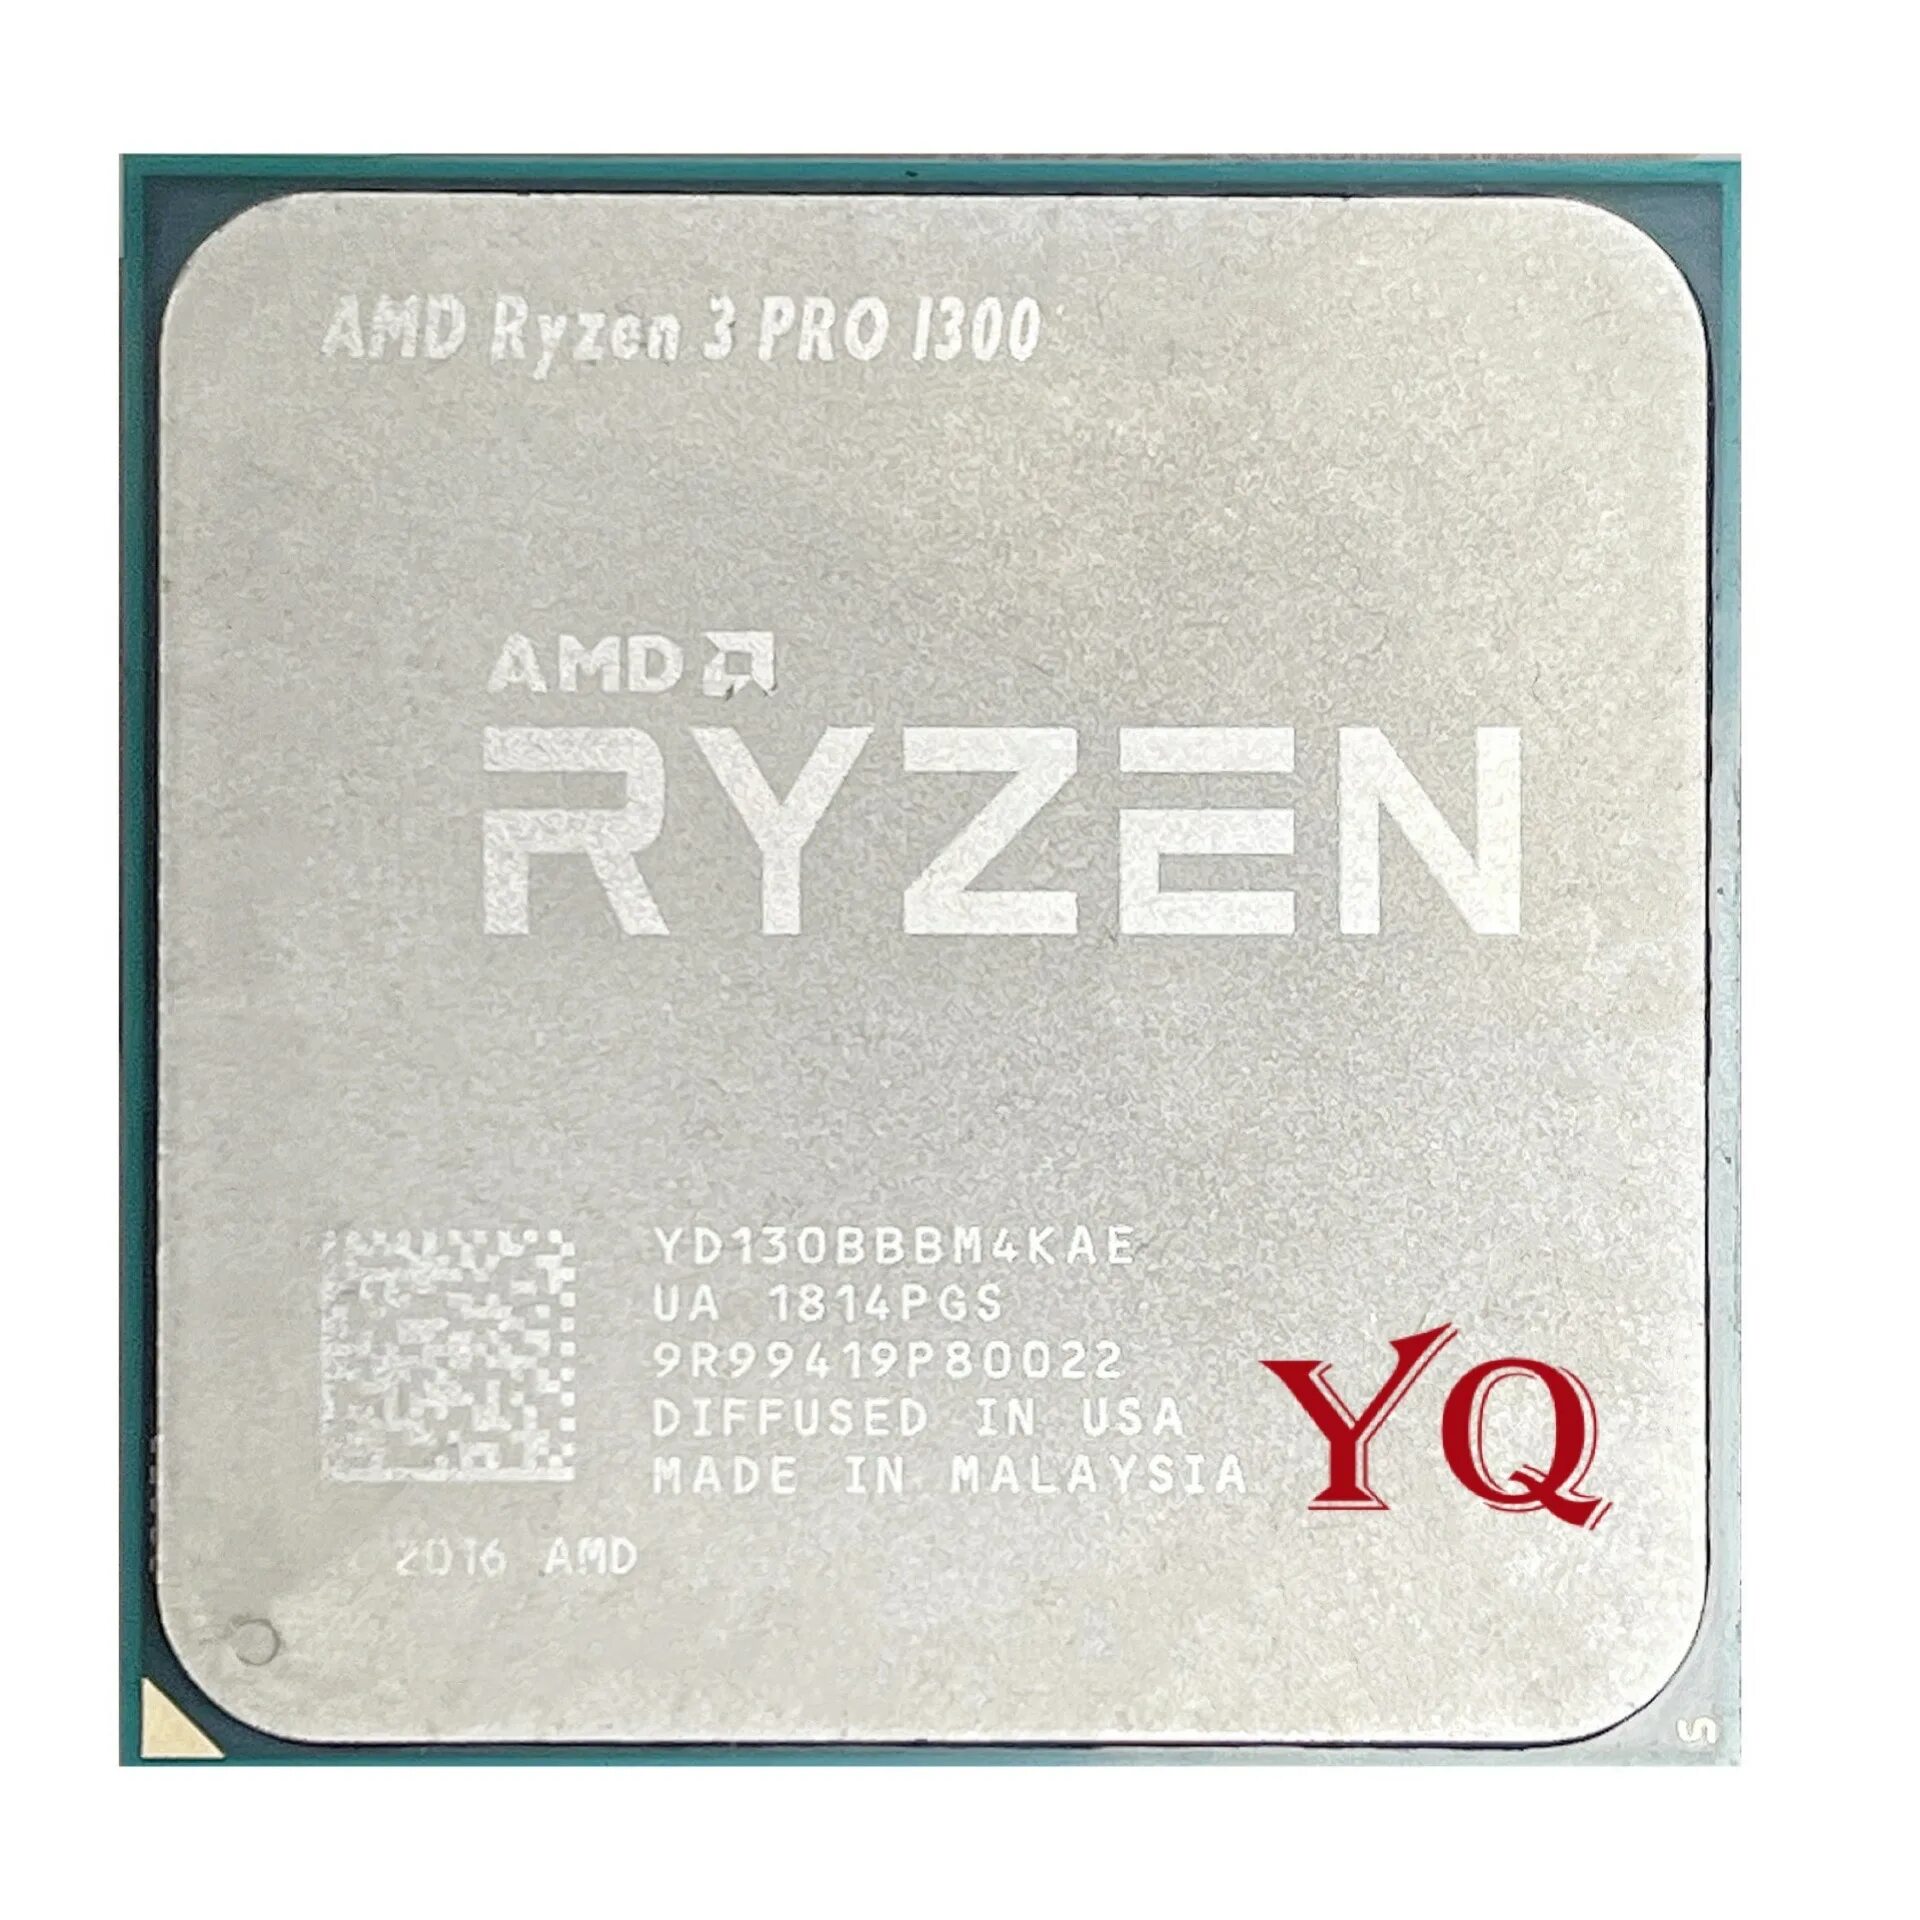 Ryzen 3 pro 1300. R3 1300 Pro процессор. Ryzen 3 1300. AMD Ryzen 3 Pro 1300 Quad-Core. A10 Vision AMD.